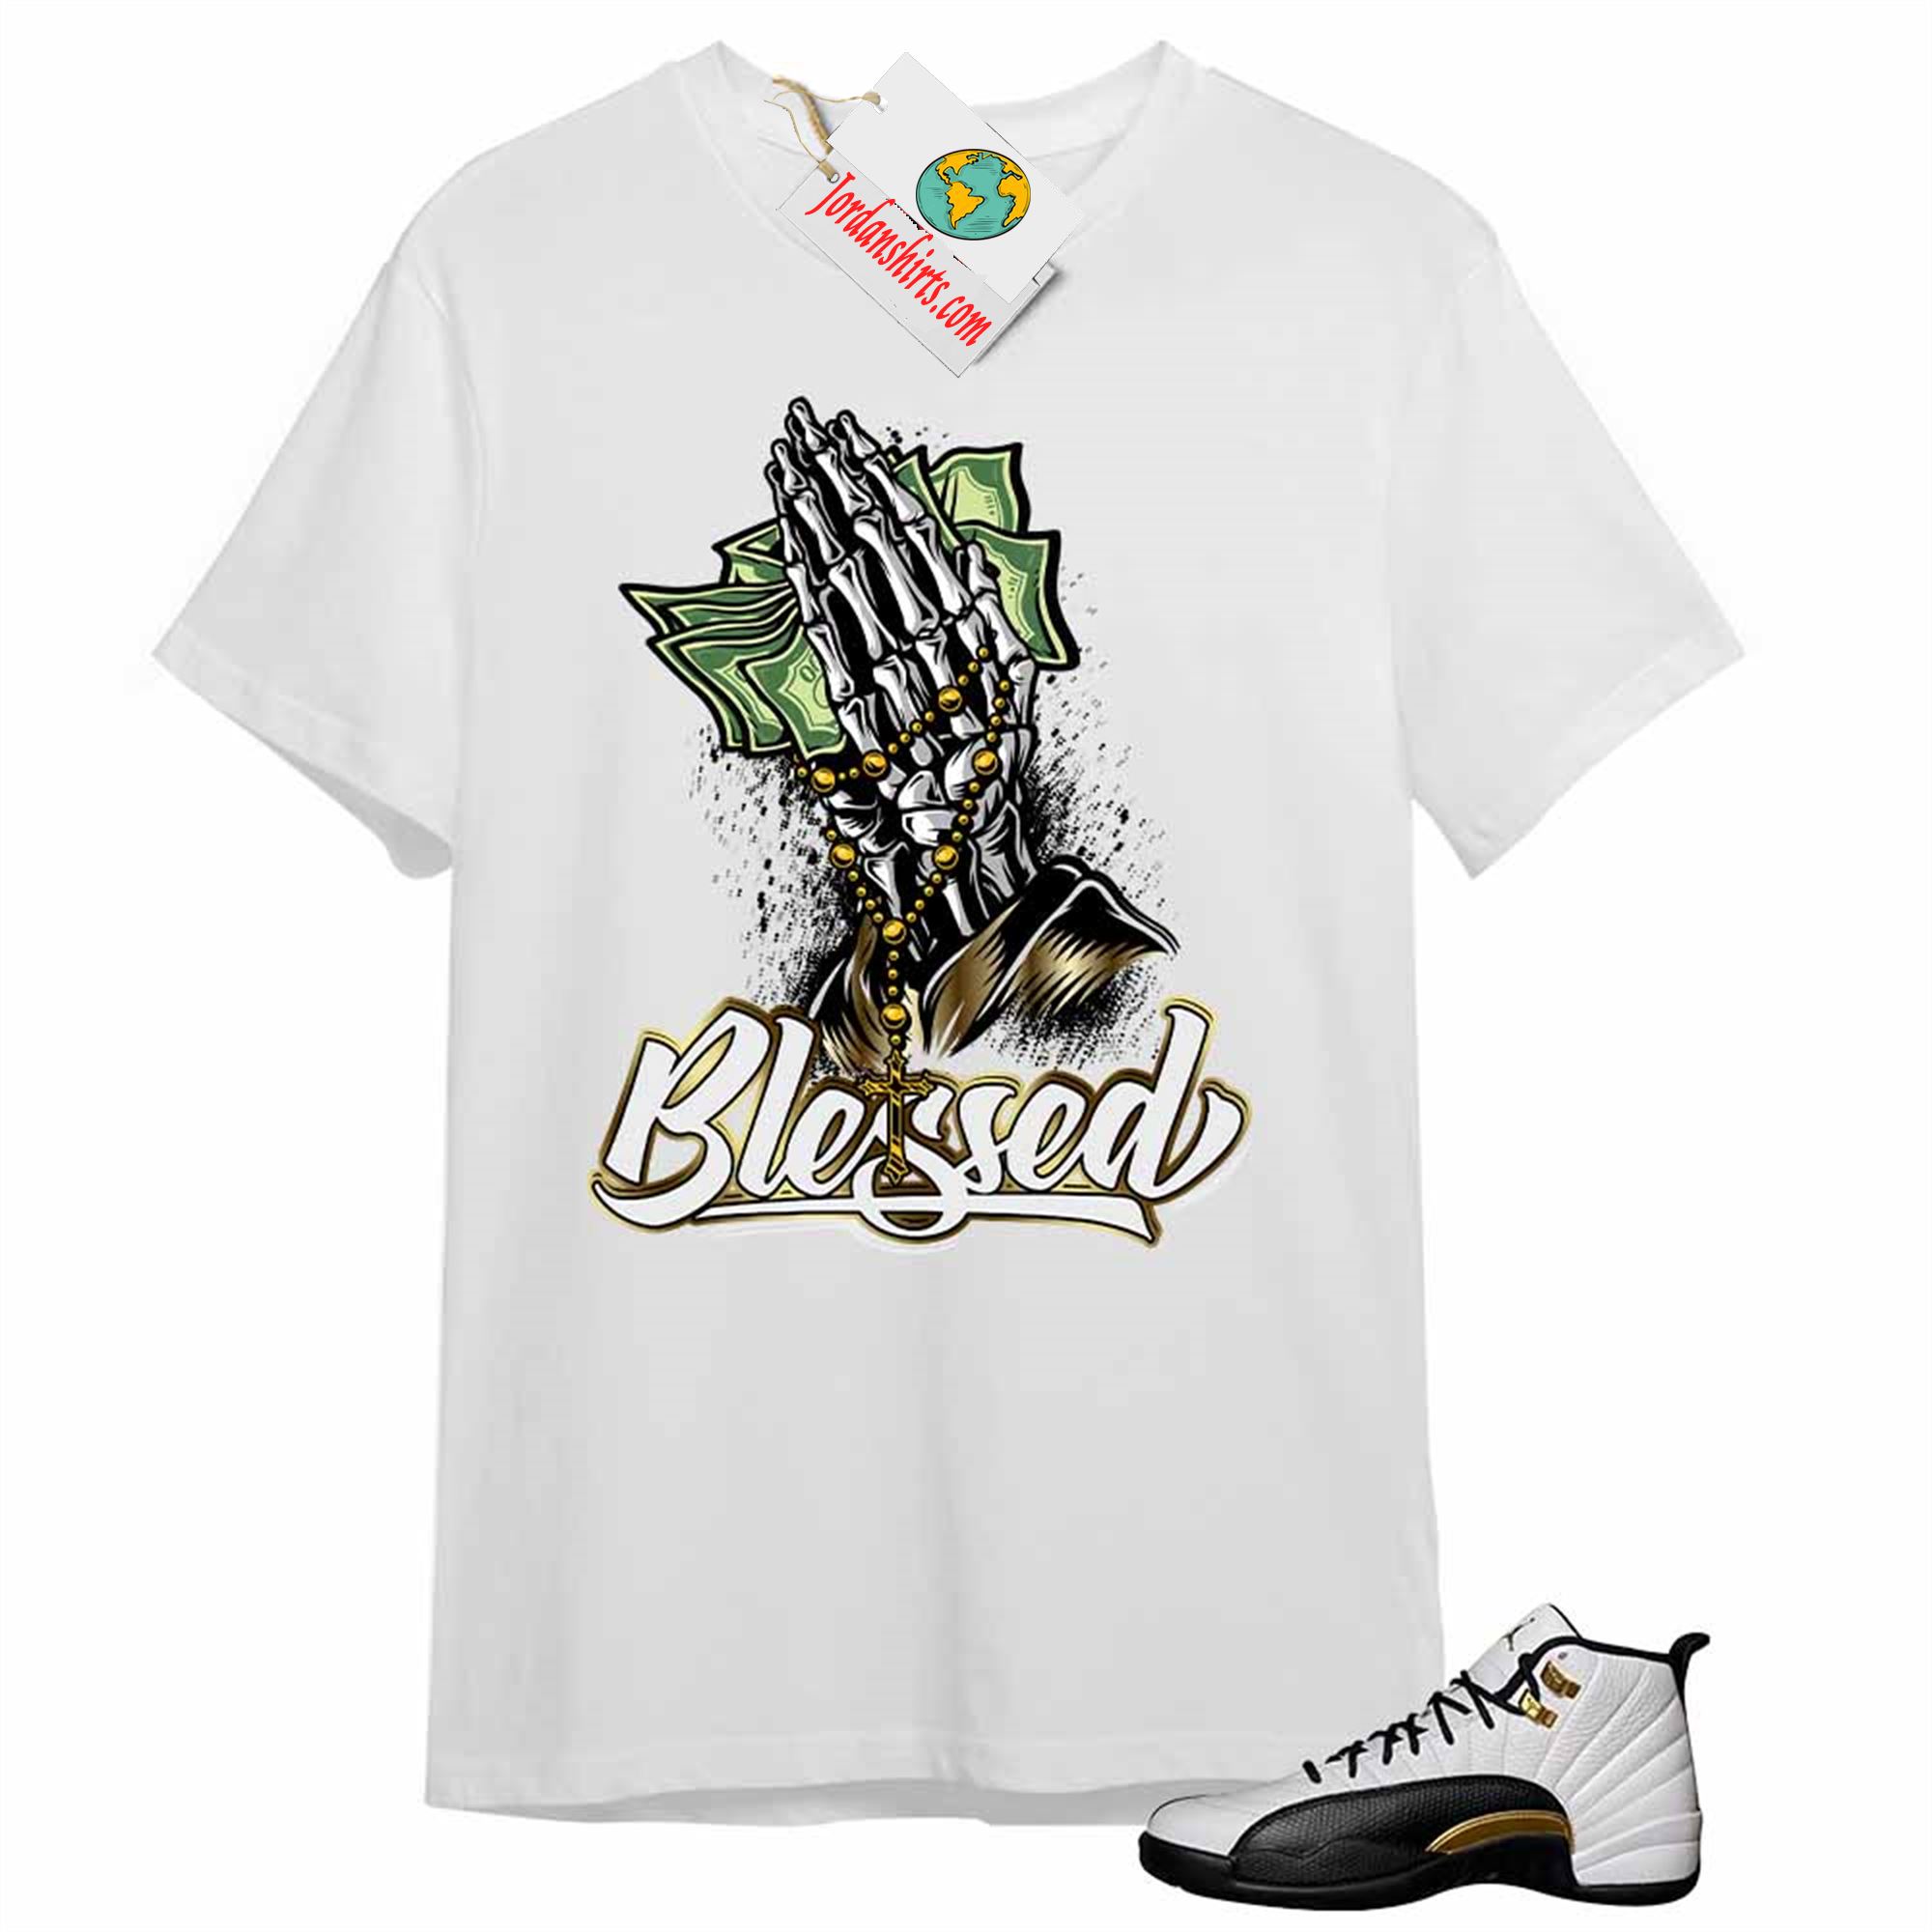 Jordan 12 Shirt, Blessed Pray Hand Money White Air Jordan 12 Royalty 12s Size Up To 5xl